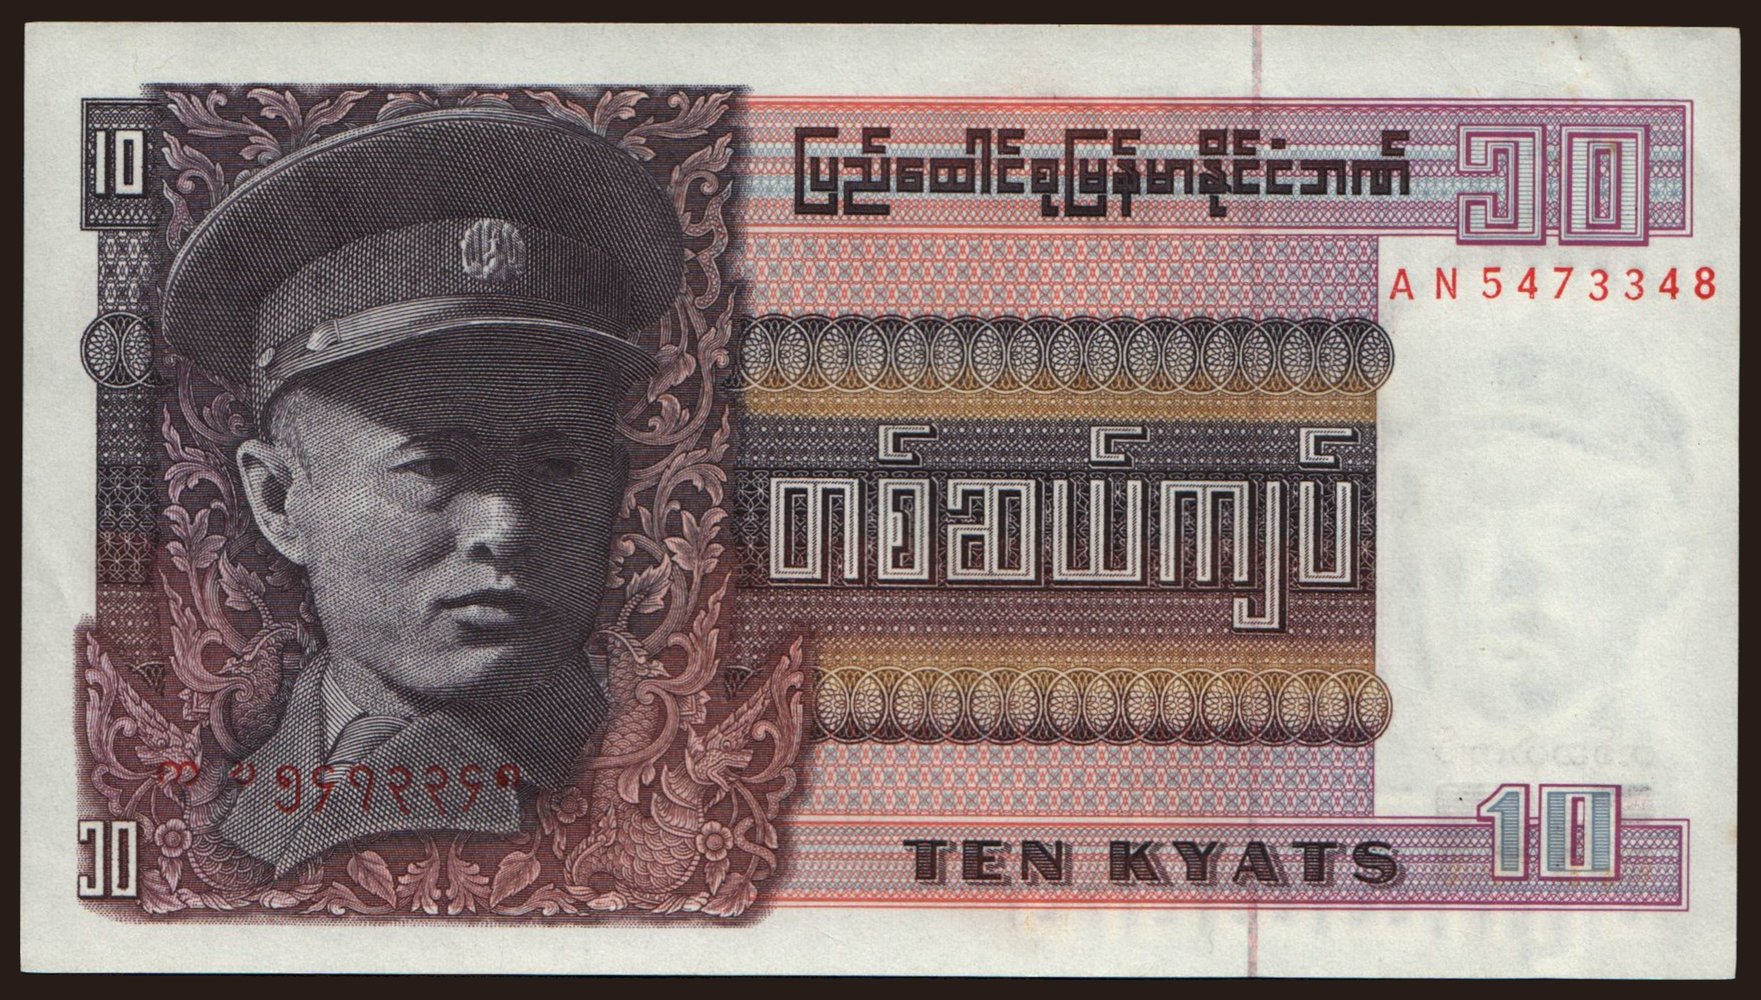 10 kyats, 1973